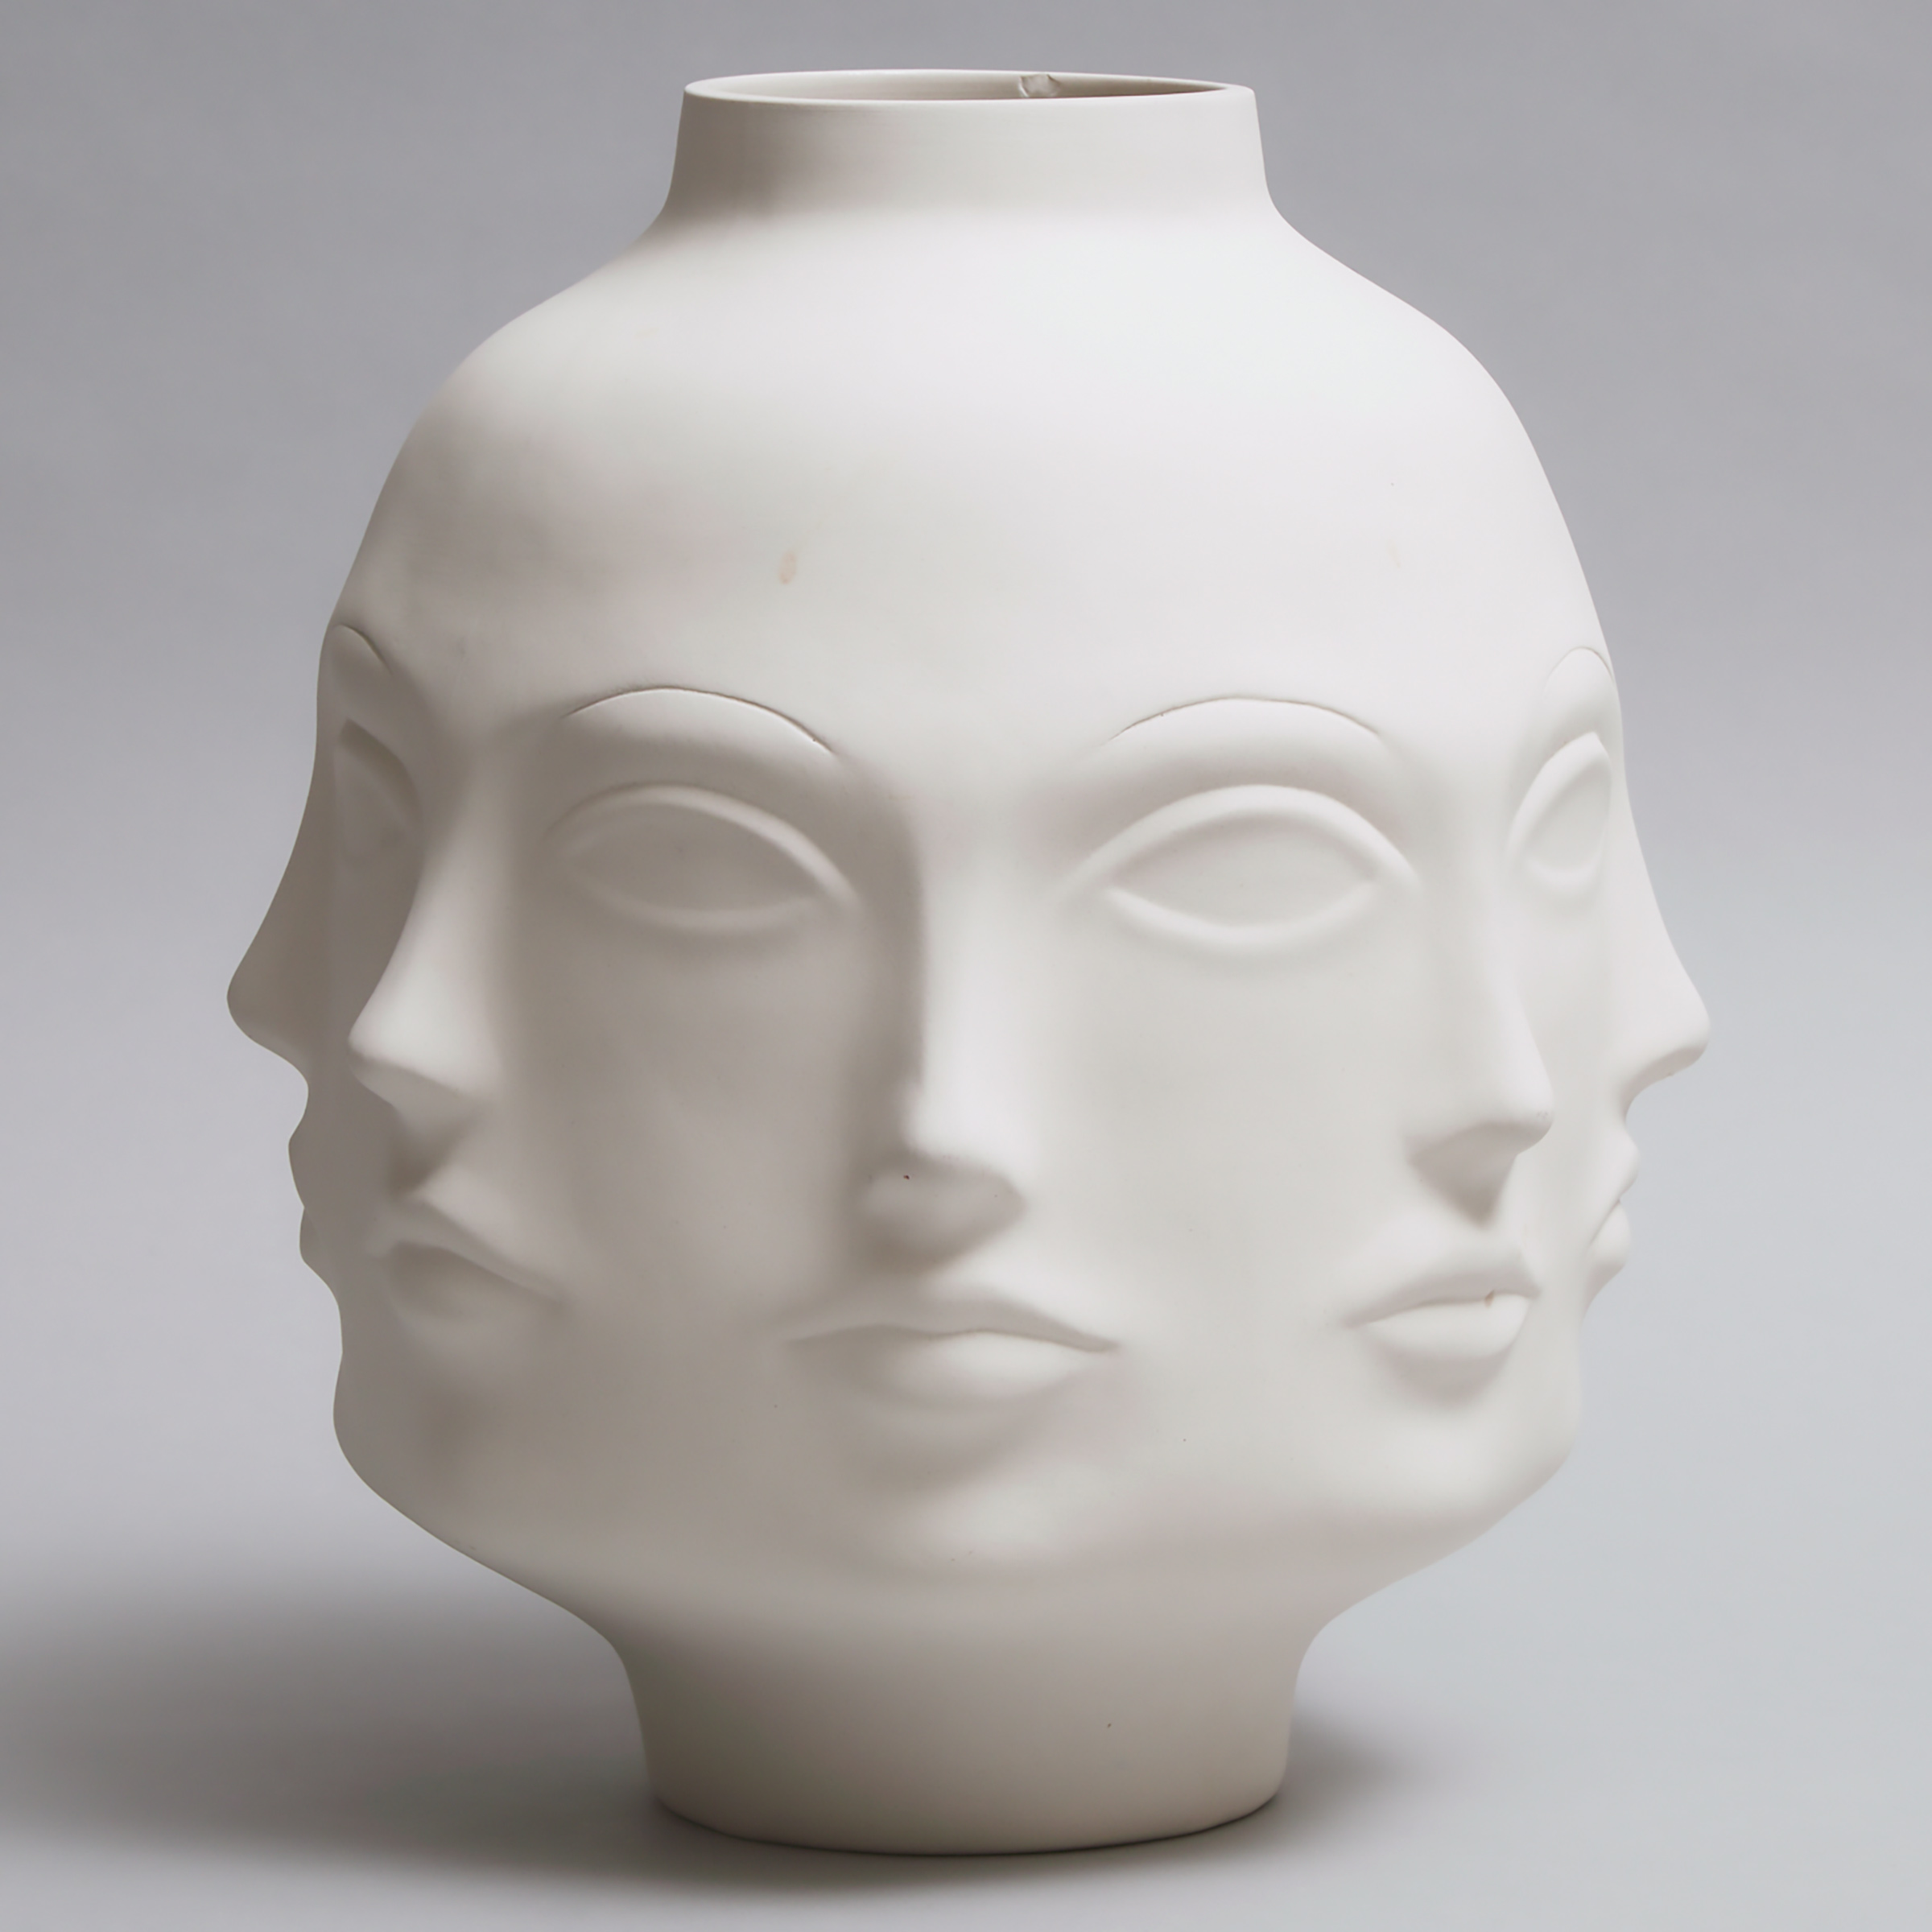 Jonathan Adler (American, b.1966), Large 'Dora Maar' Perpetual Face Vase, 21st century